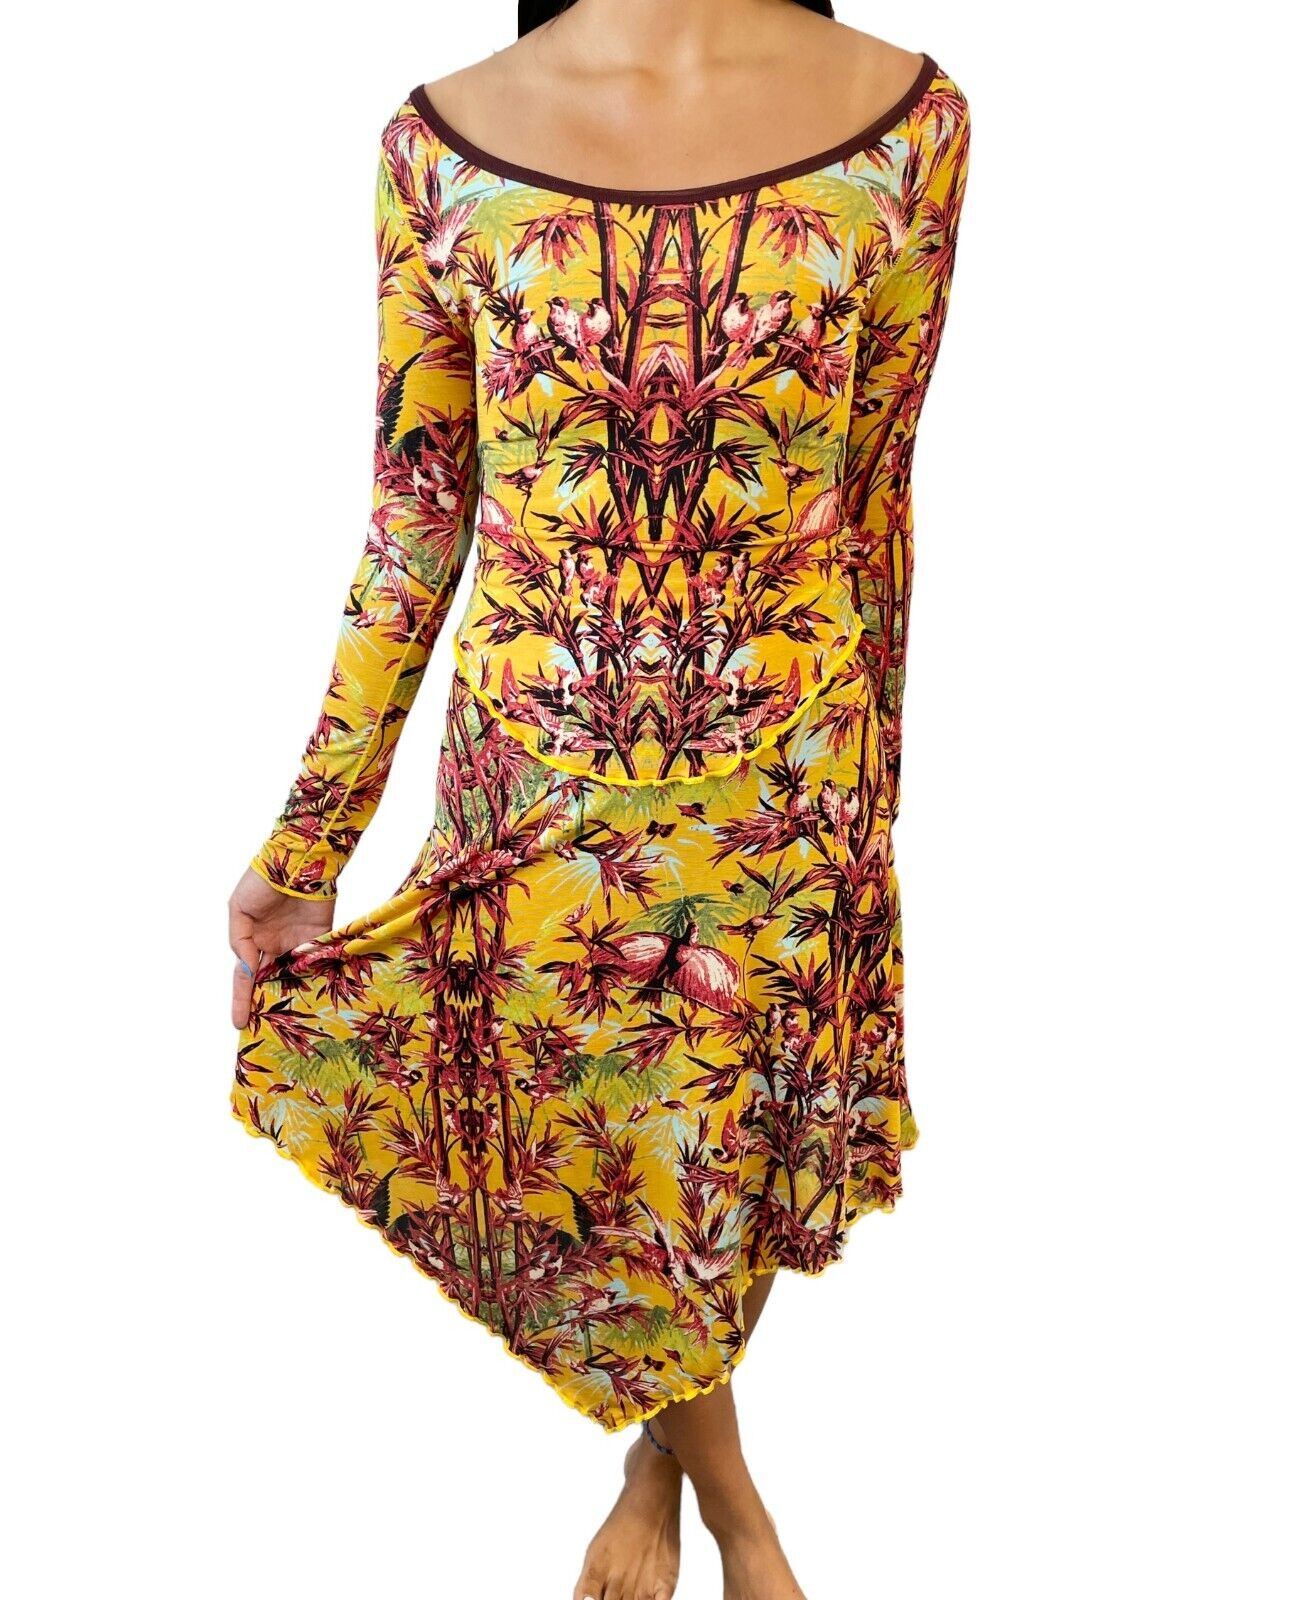 Jean Paul GAULTIER Vintage 2piece Dress #40 Top Skirt Set Nylon Yellow RankA